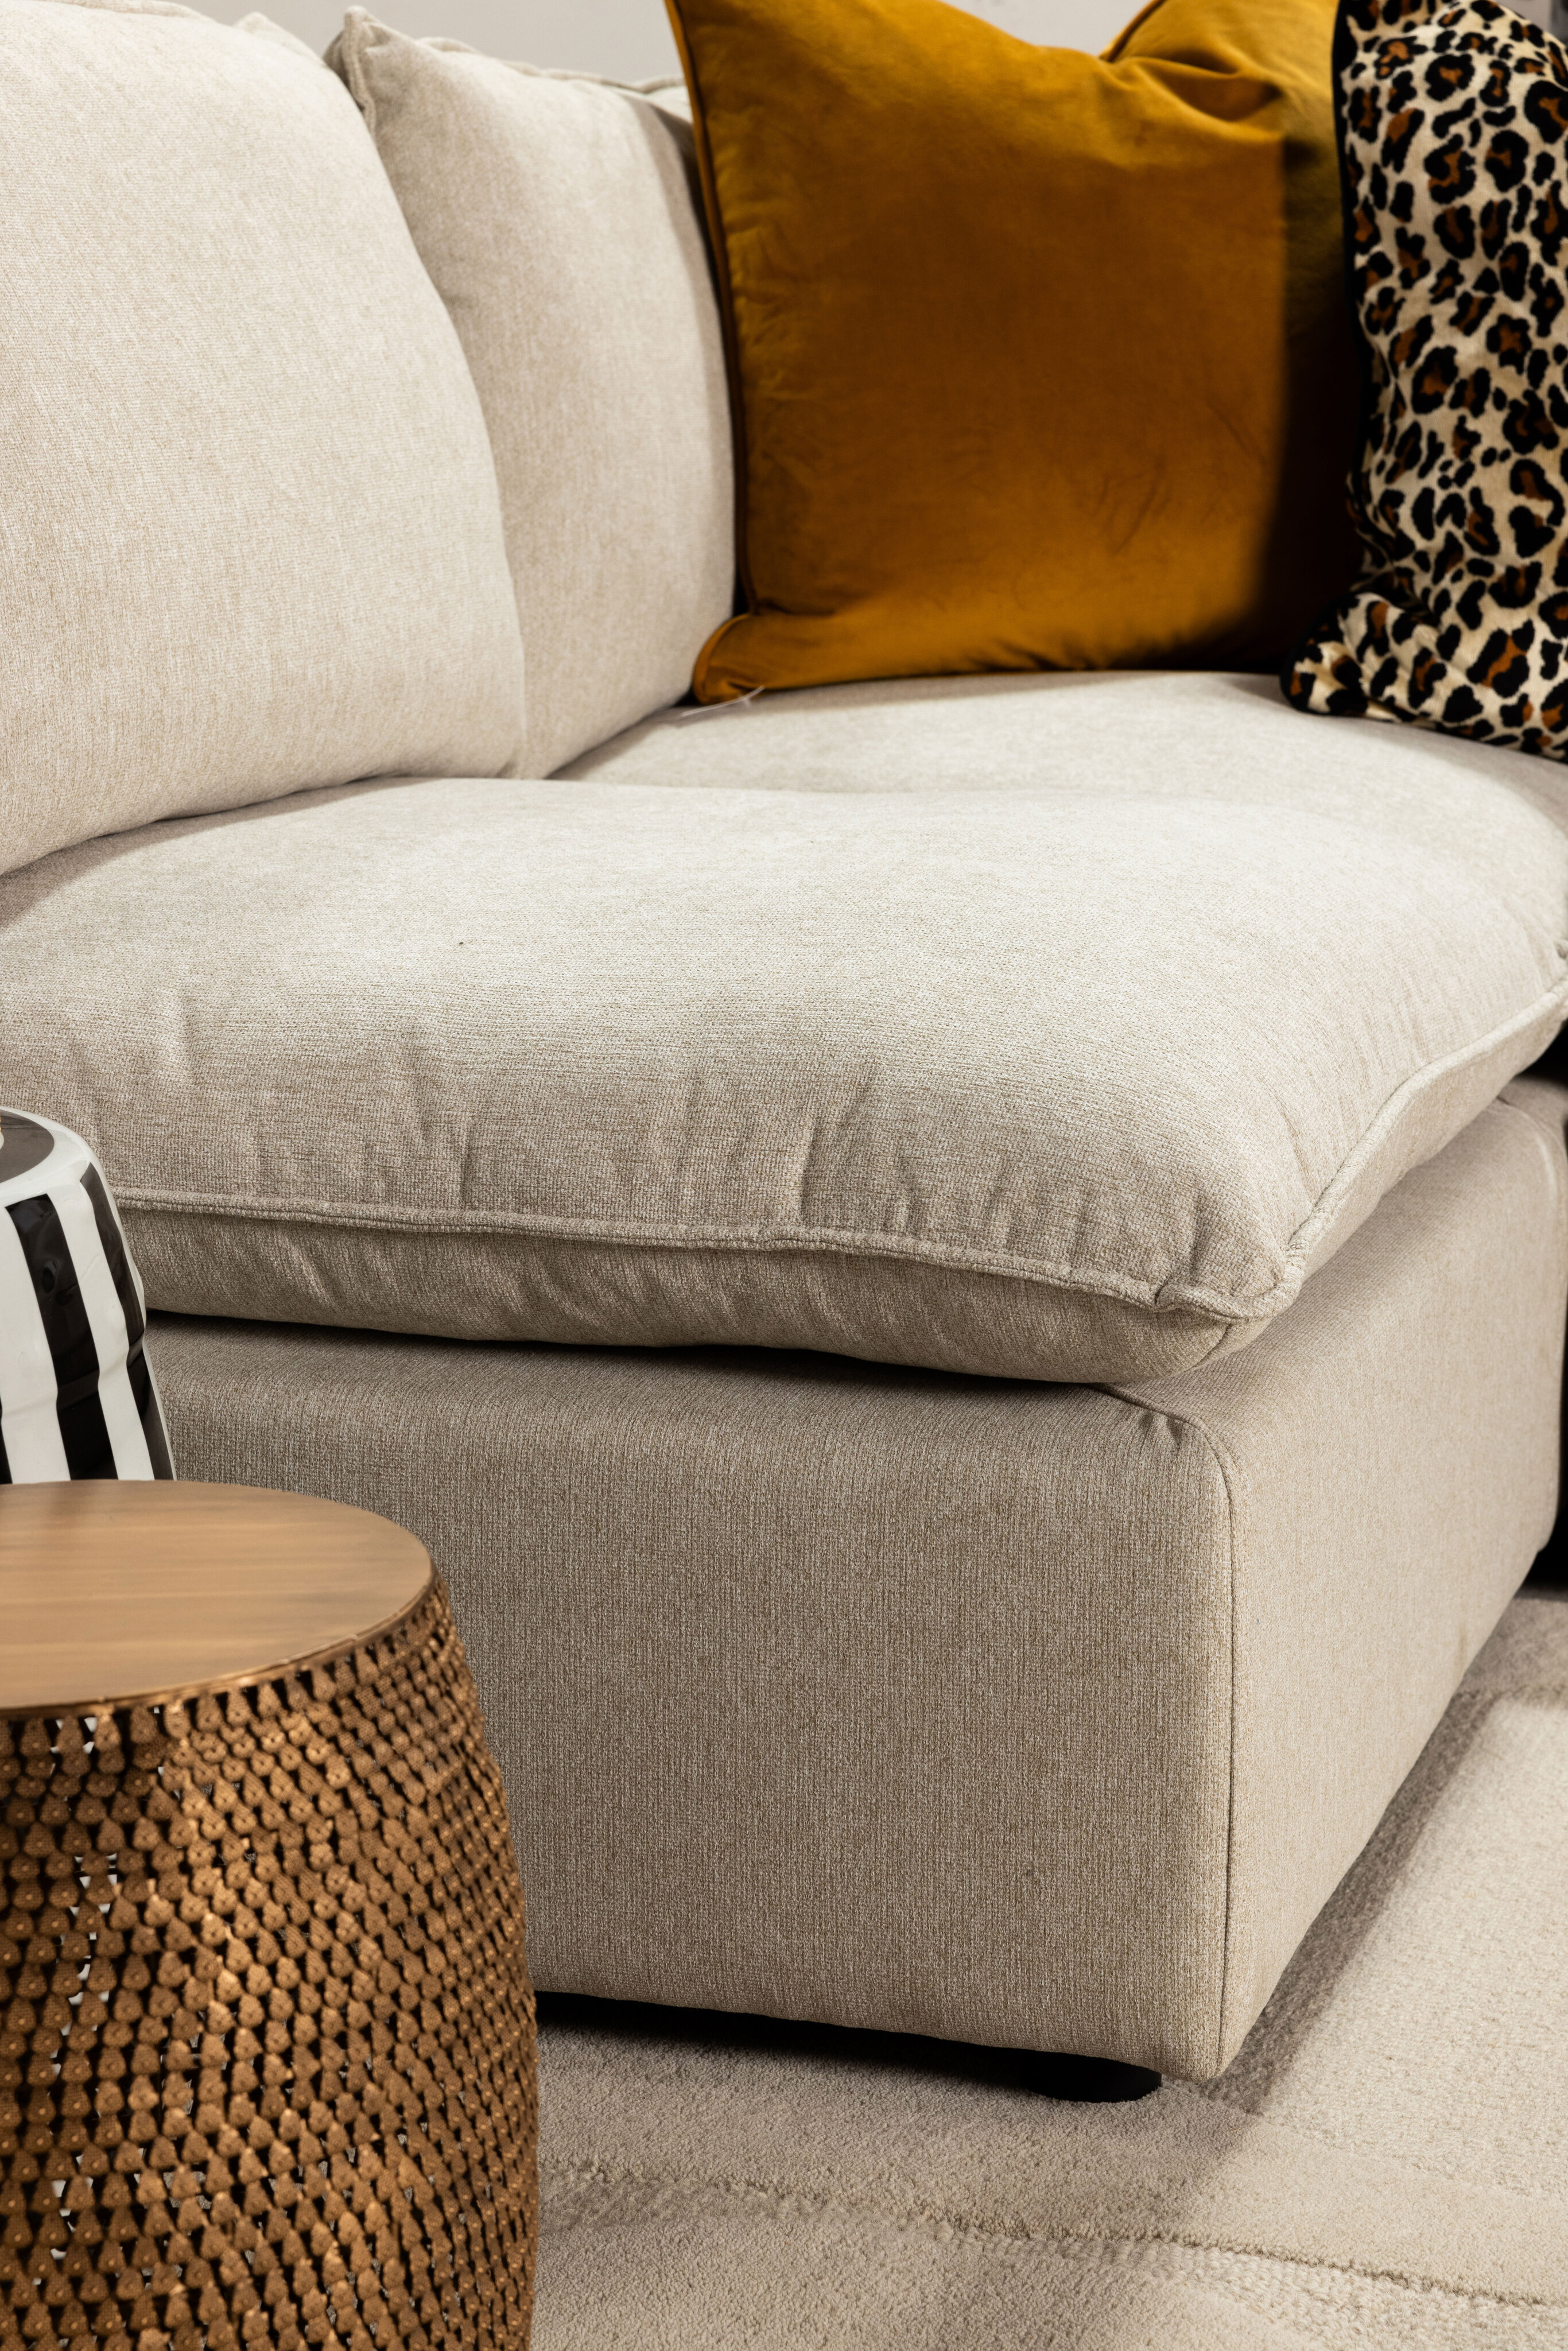 Block & Chisel cream upholstered corner sofa